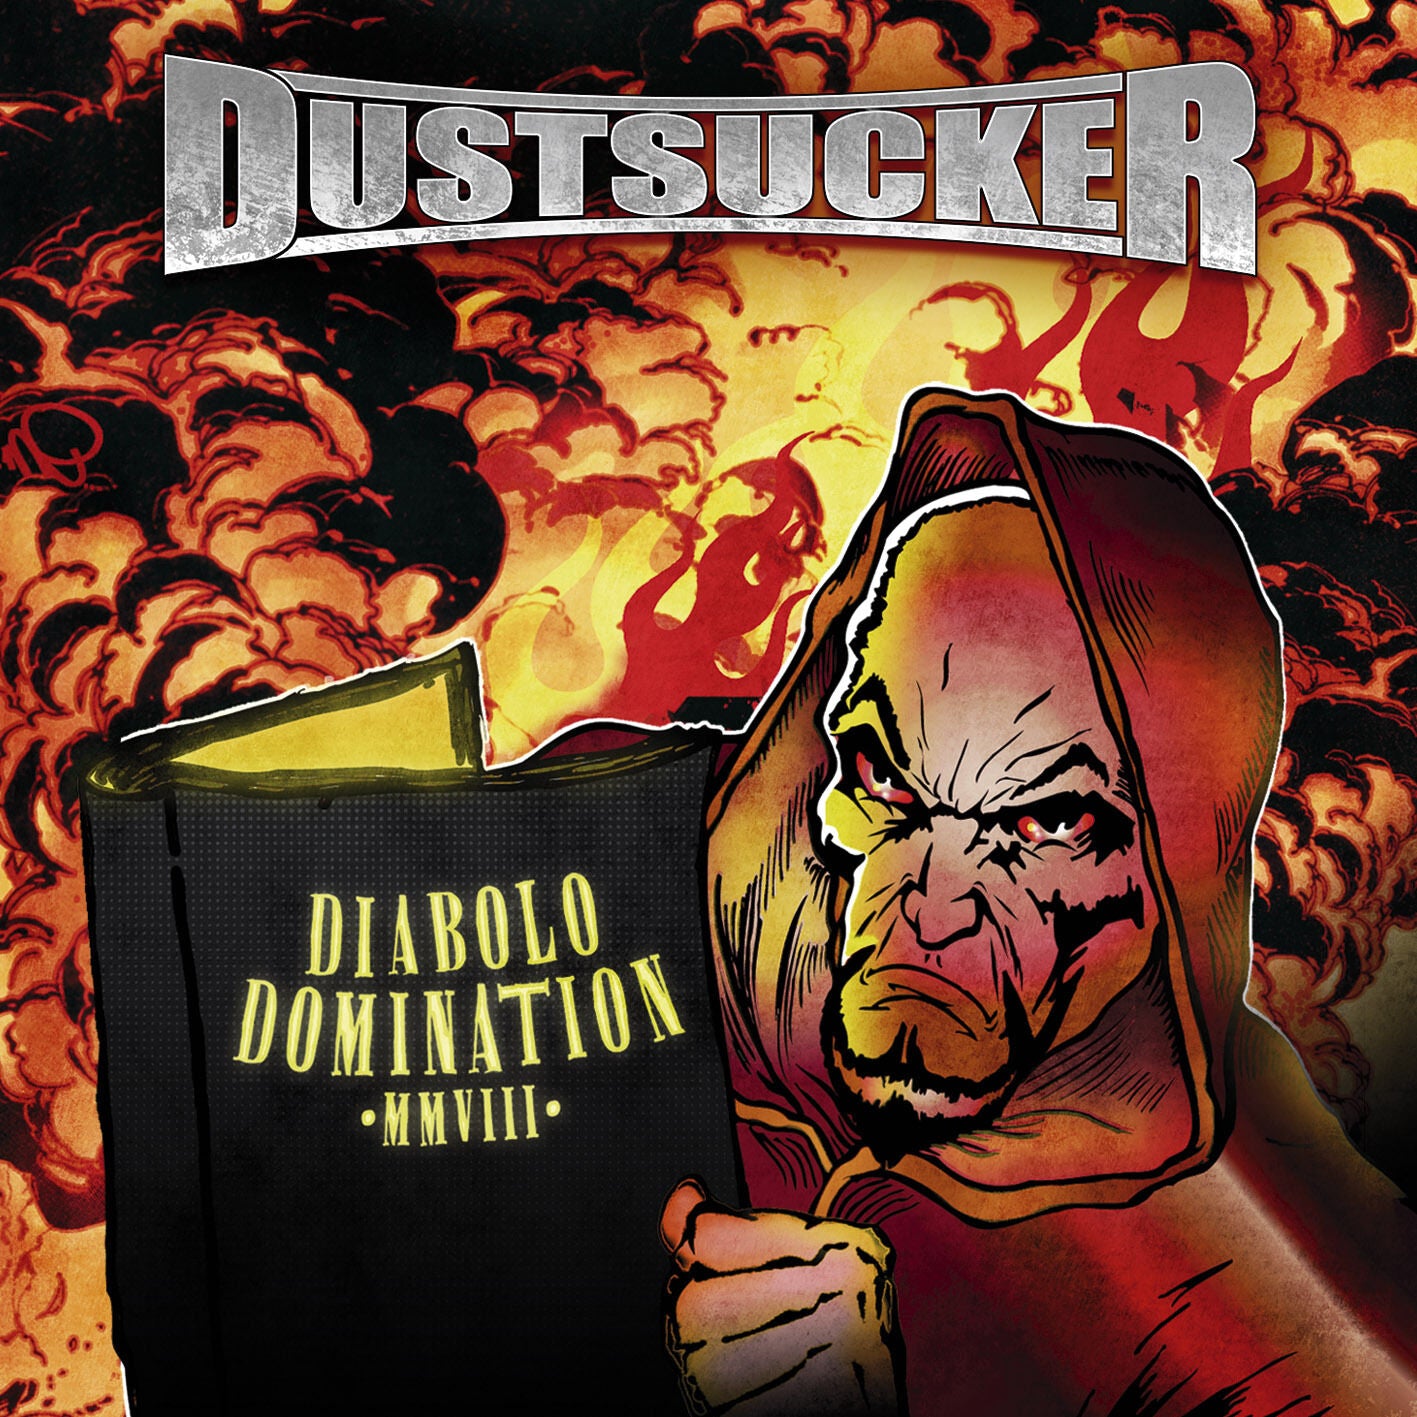 DUSTSUCKER - Diabolo Domination CD 2008 Dirty High Energy Rock'n'Roll